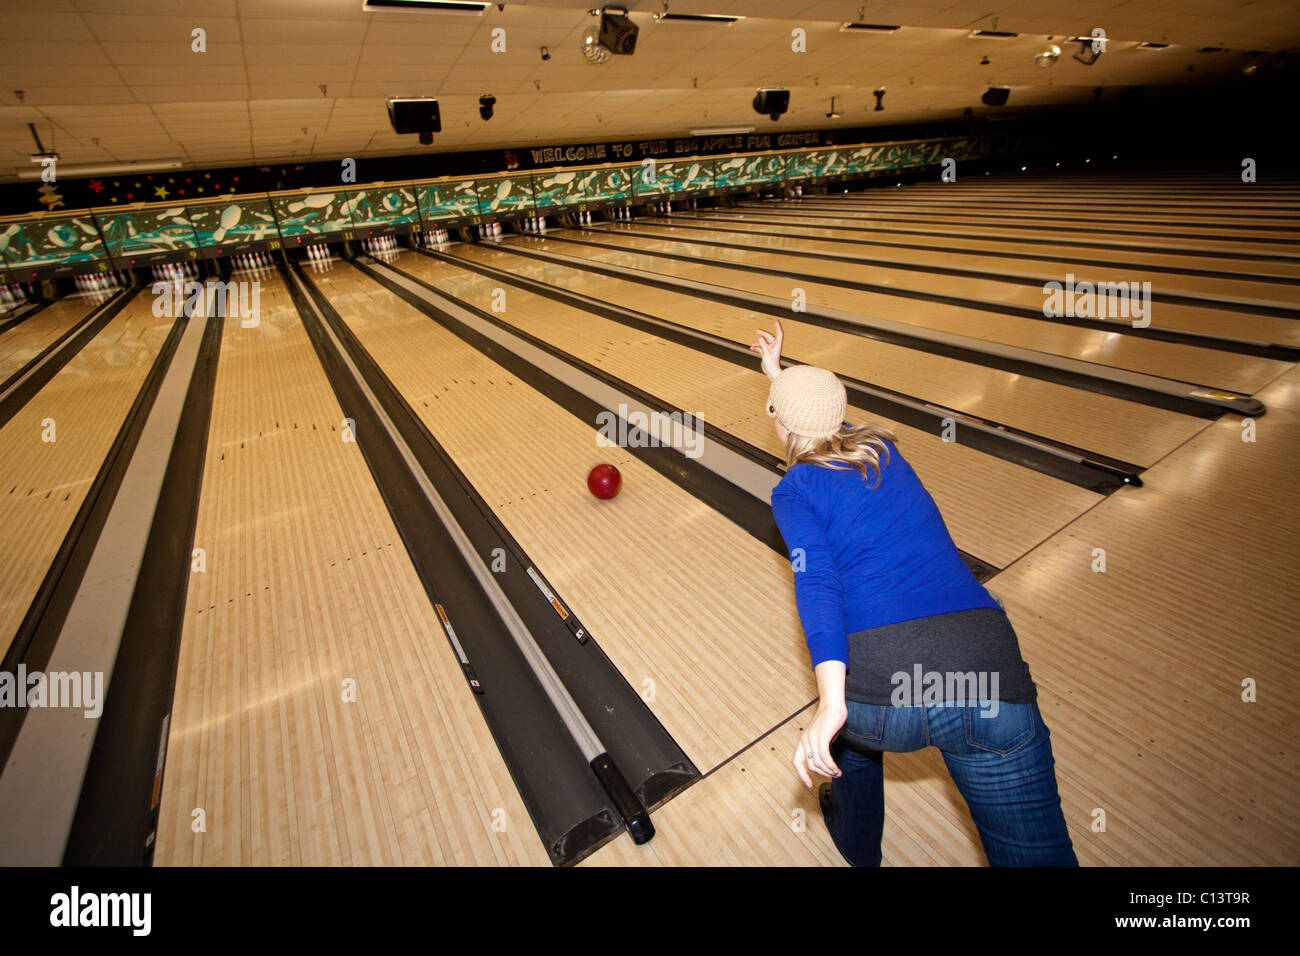 amateur tenpin bowling club Adult Pictures